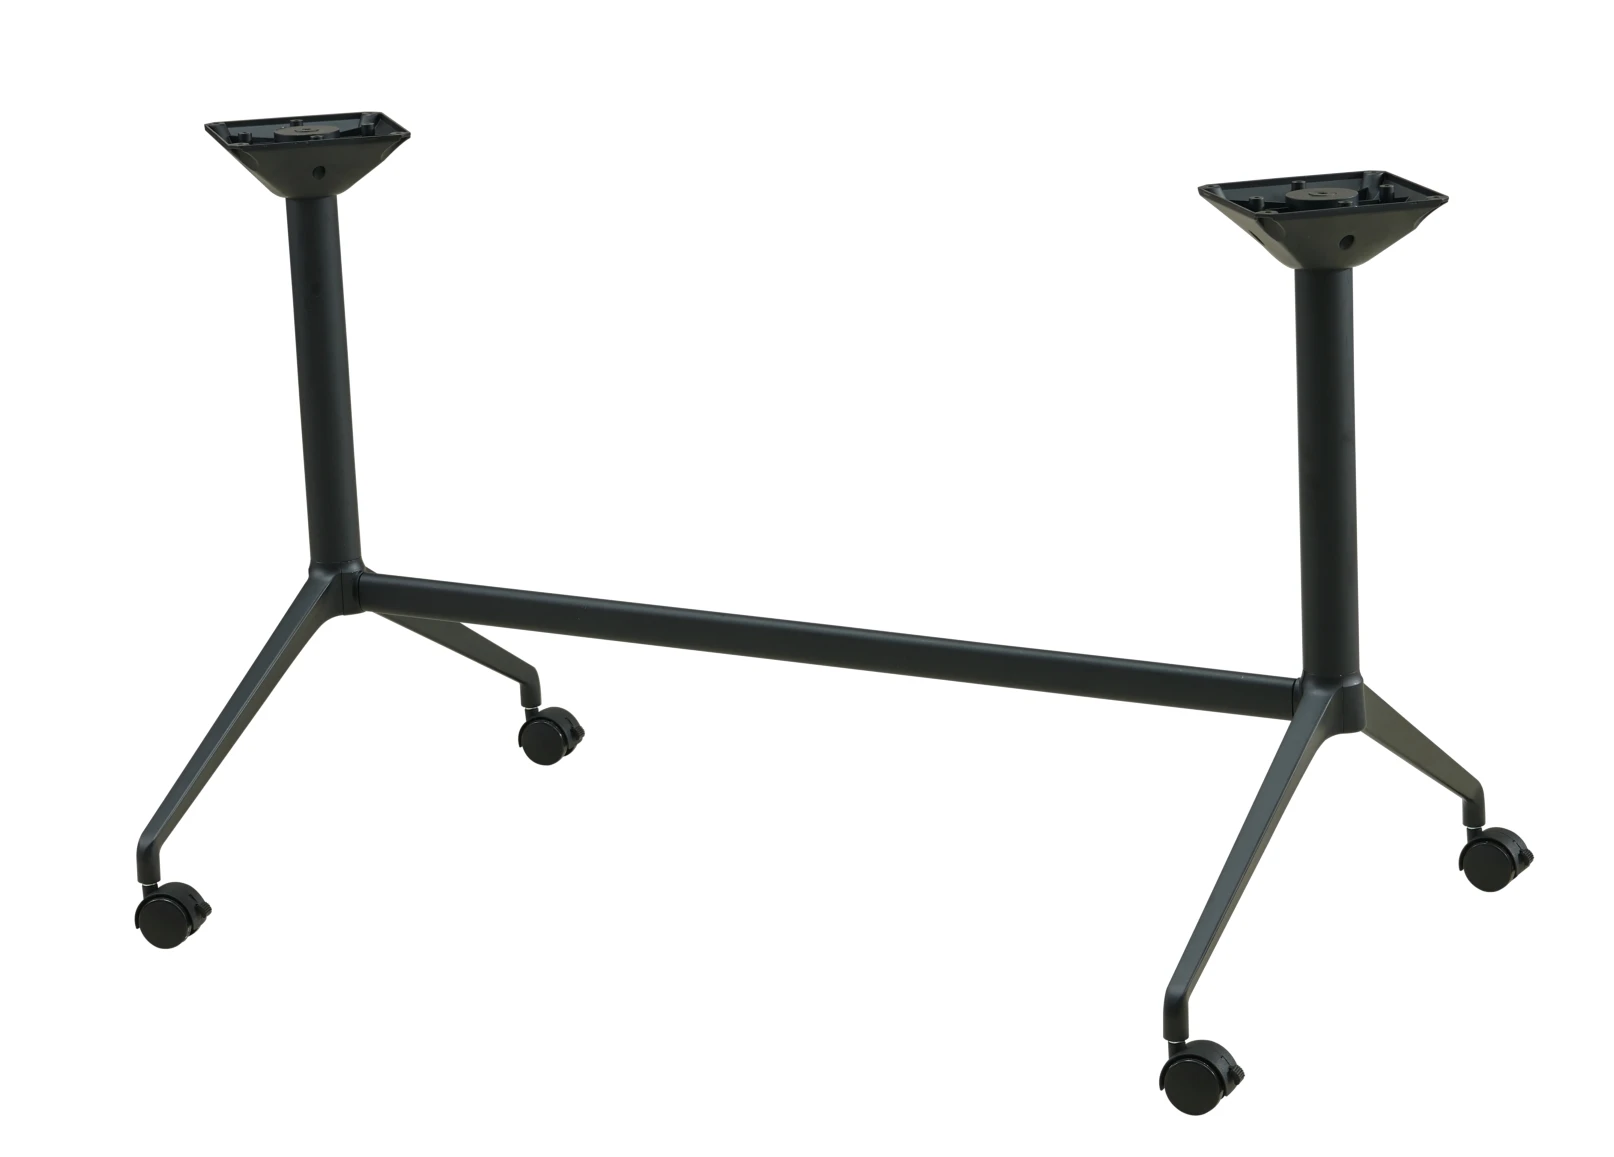 Furniture Modern Round Table Base Black Aluminum Dining Table Design Metal